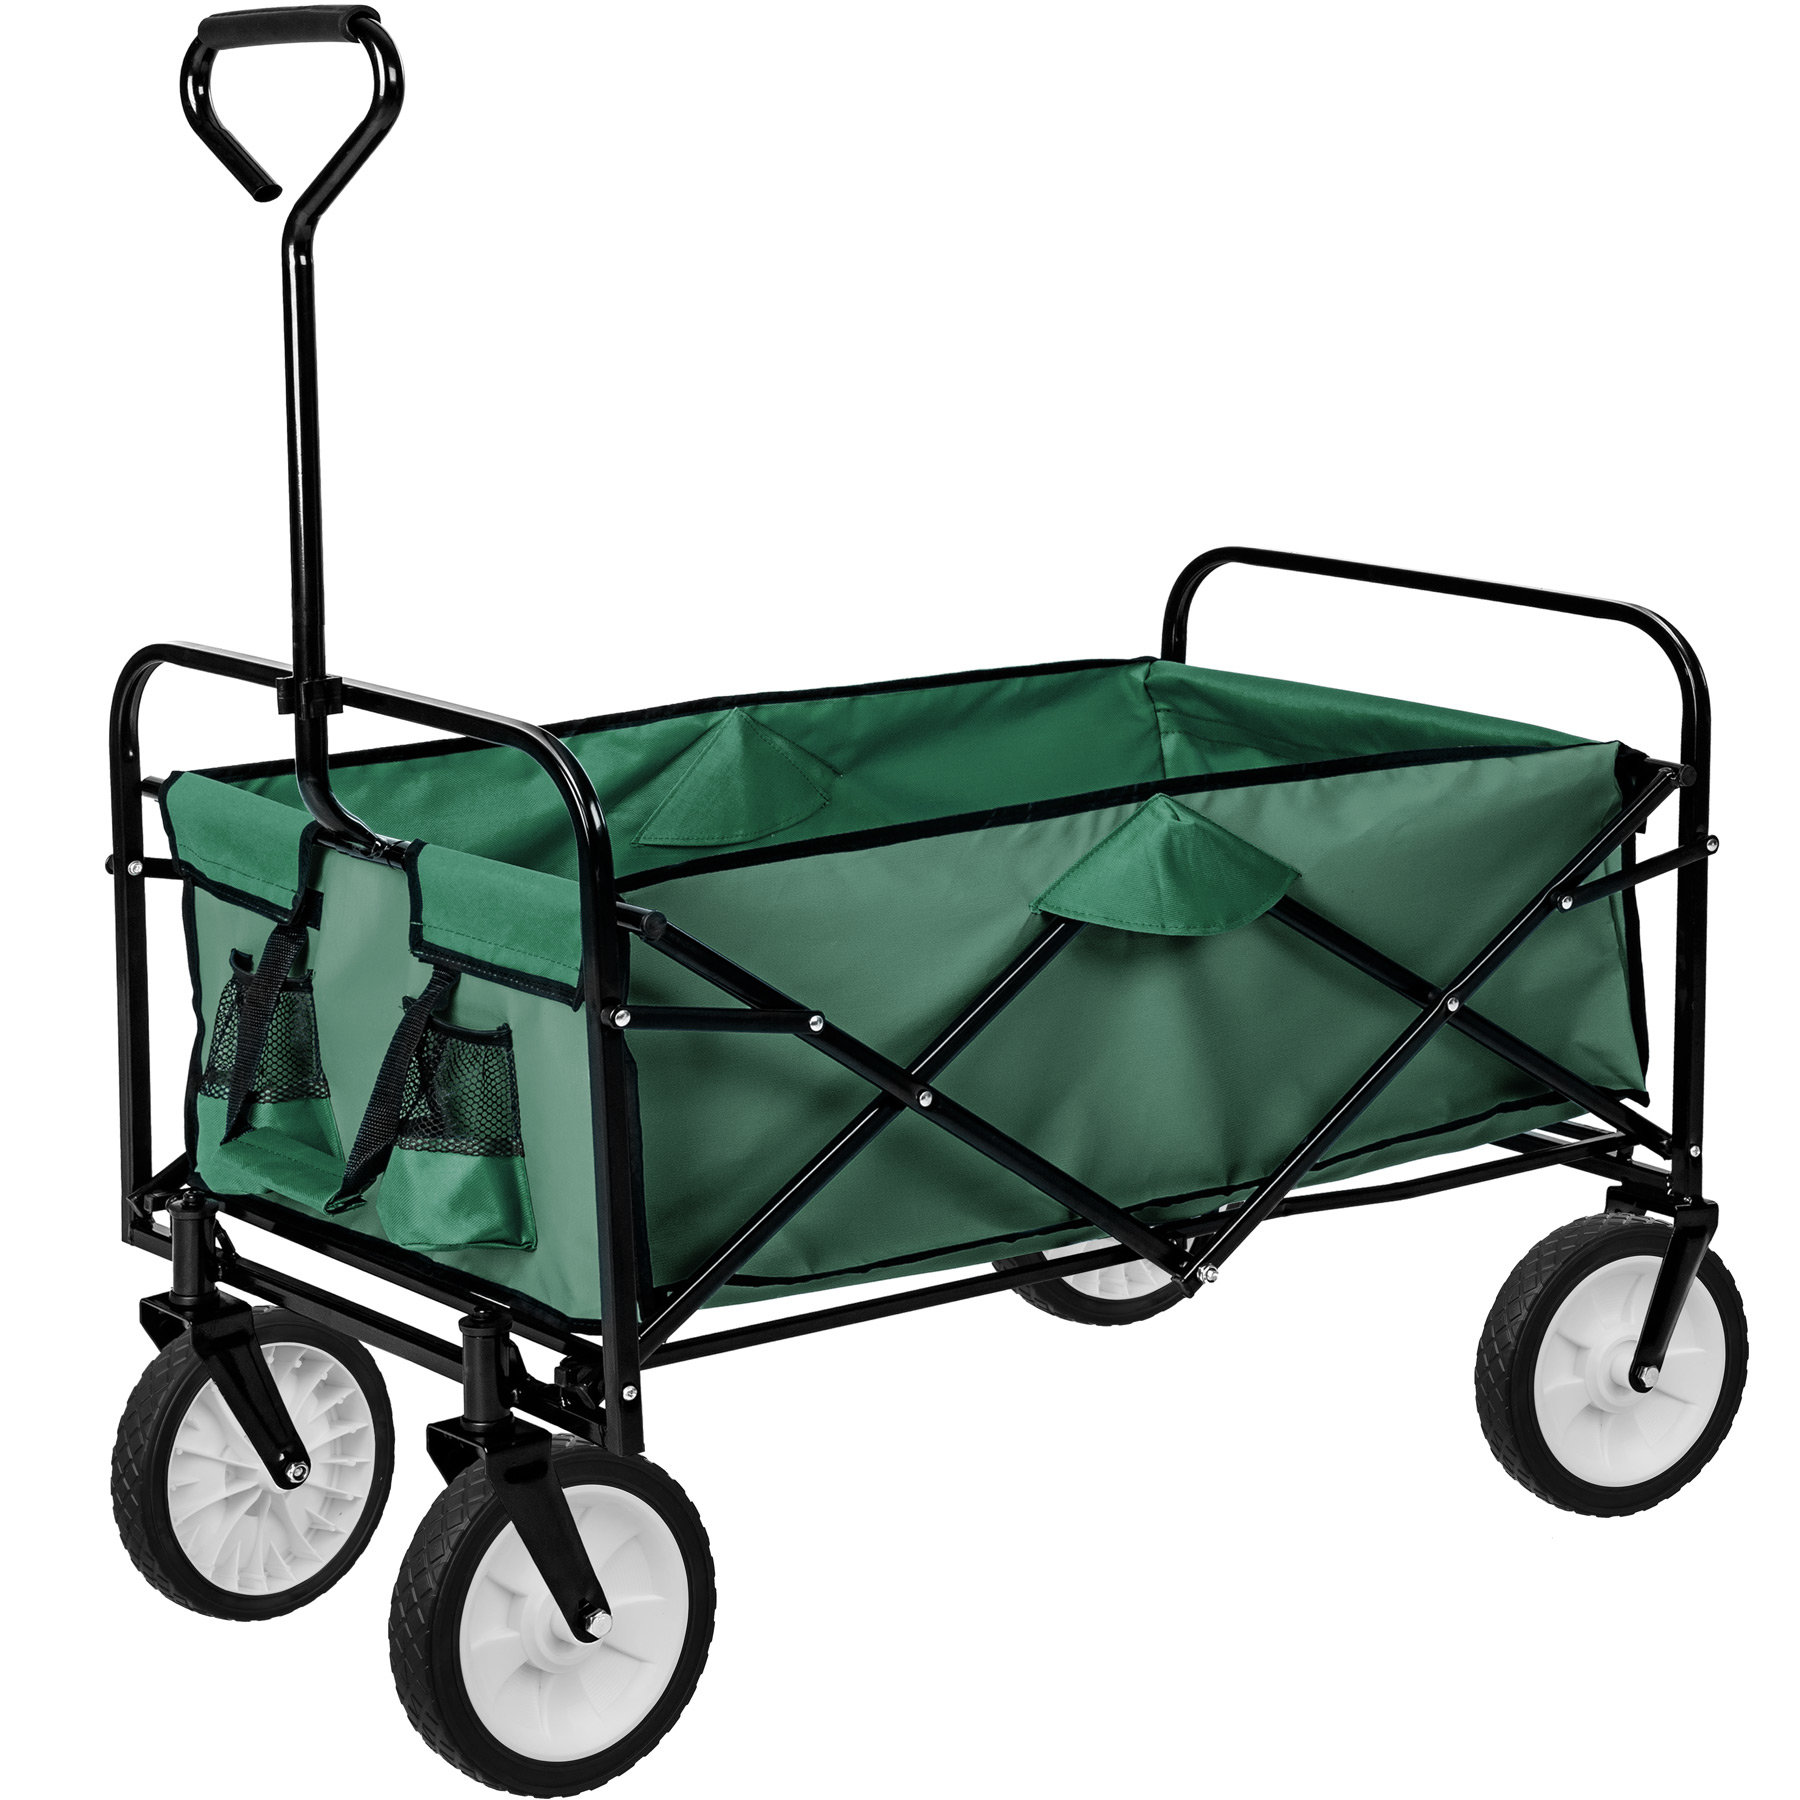 tectake Garden trolley foldable - garden cart, beach trolley, trolley cart - green